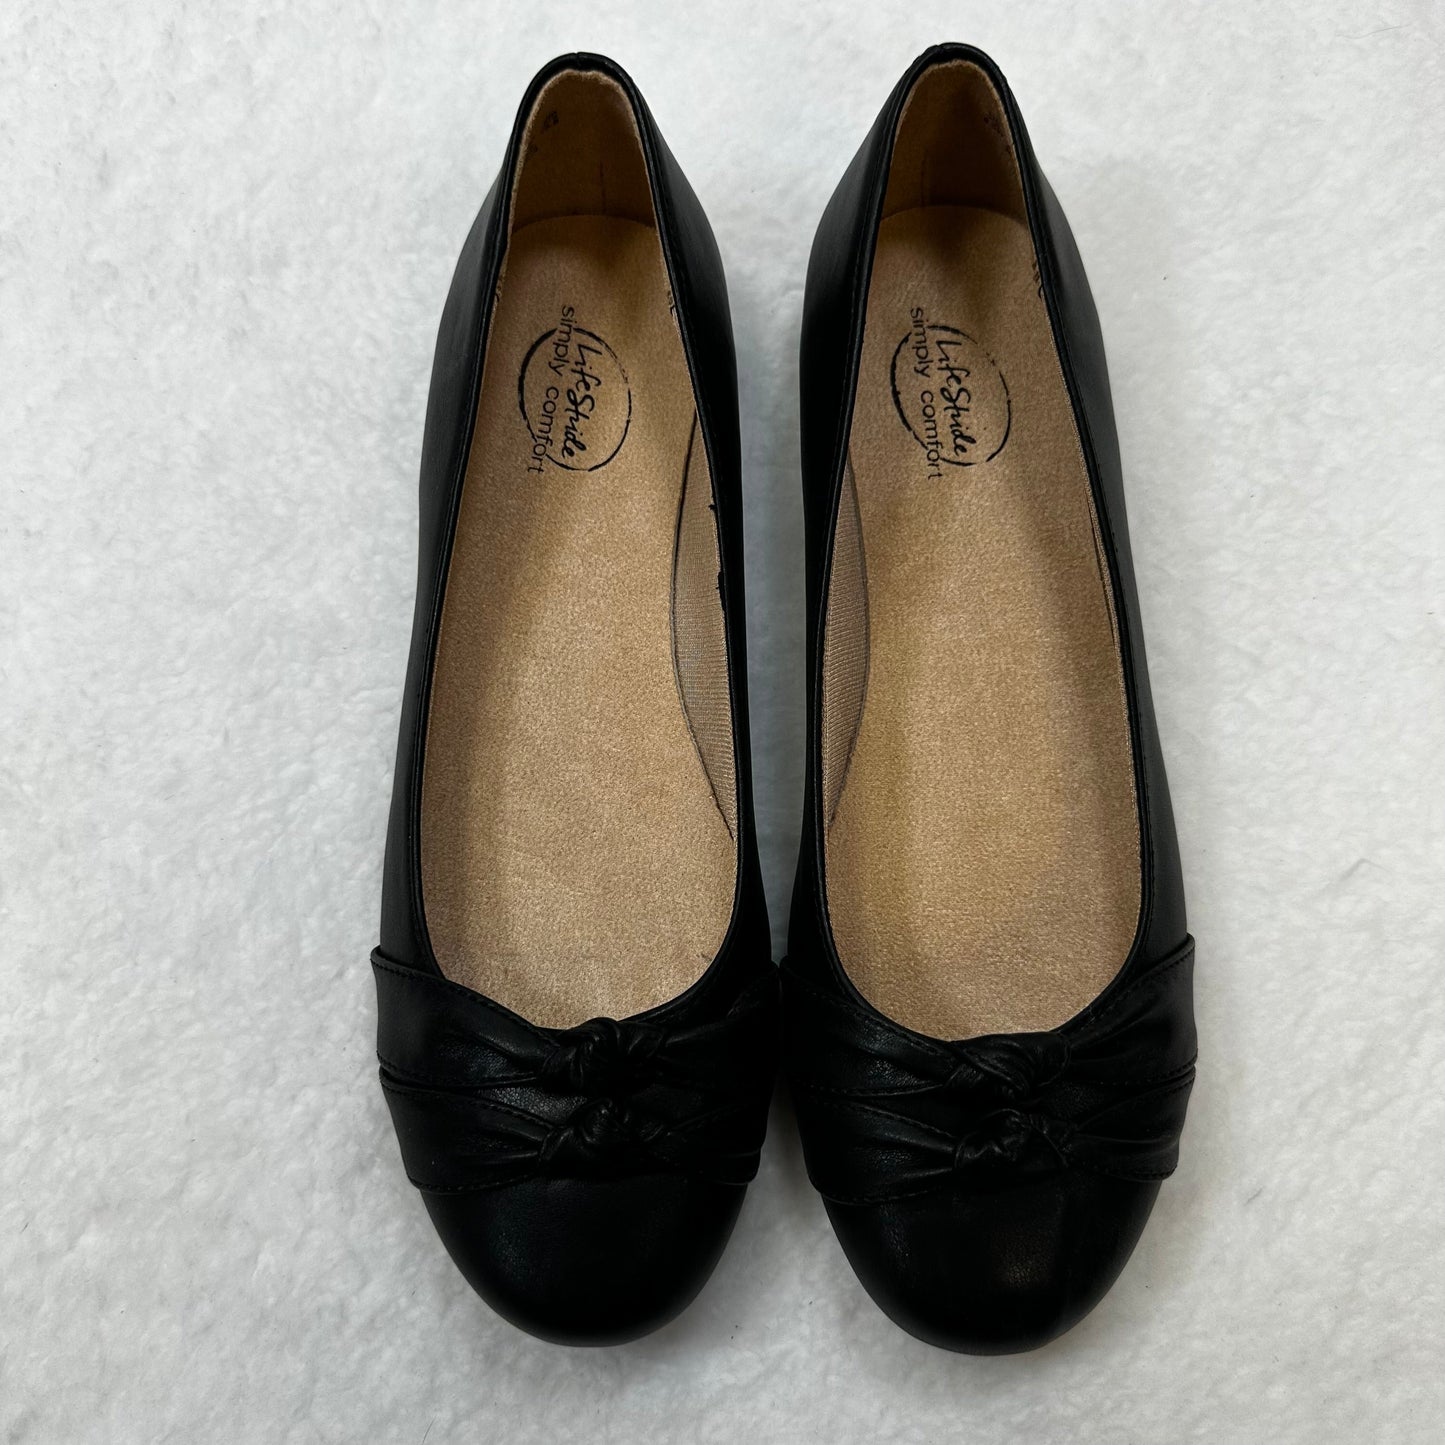 Black Shoes Flats Ballet Life Stride, Size 9.5